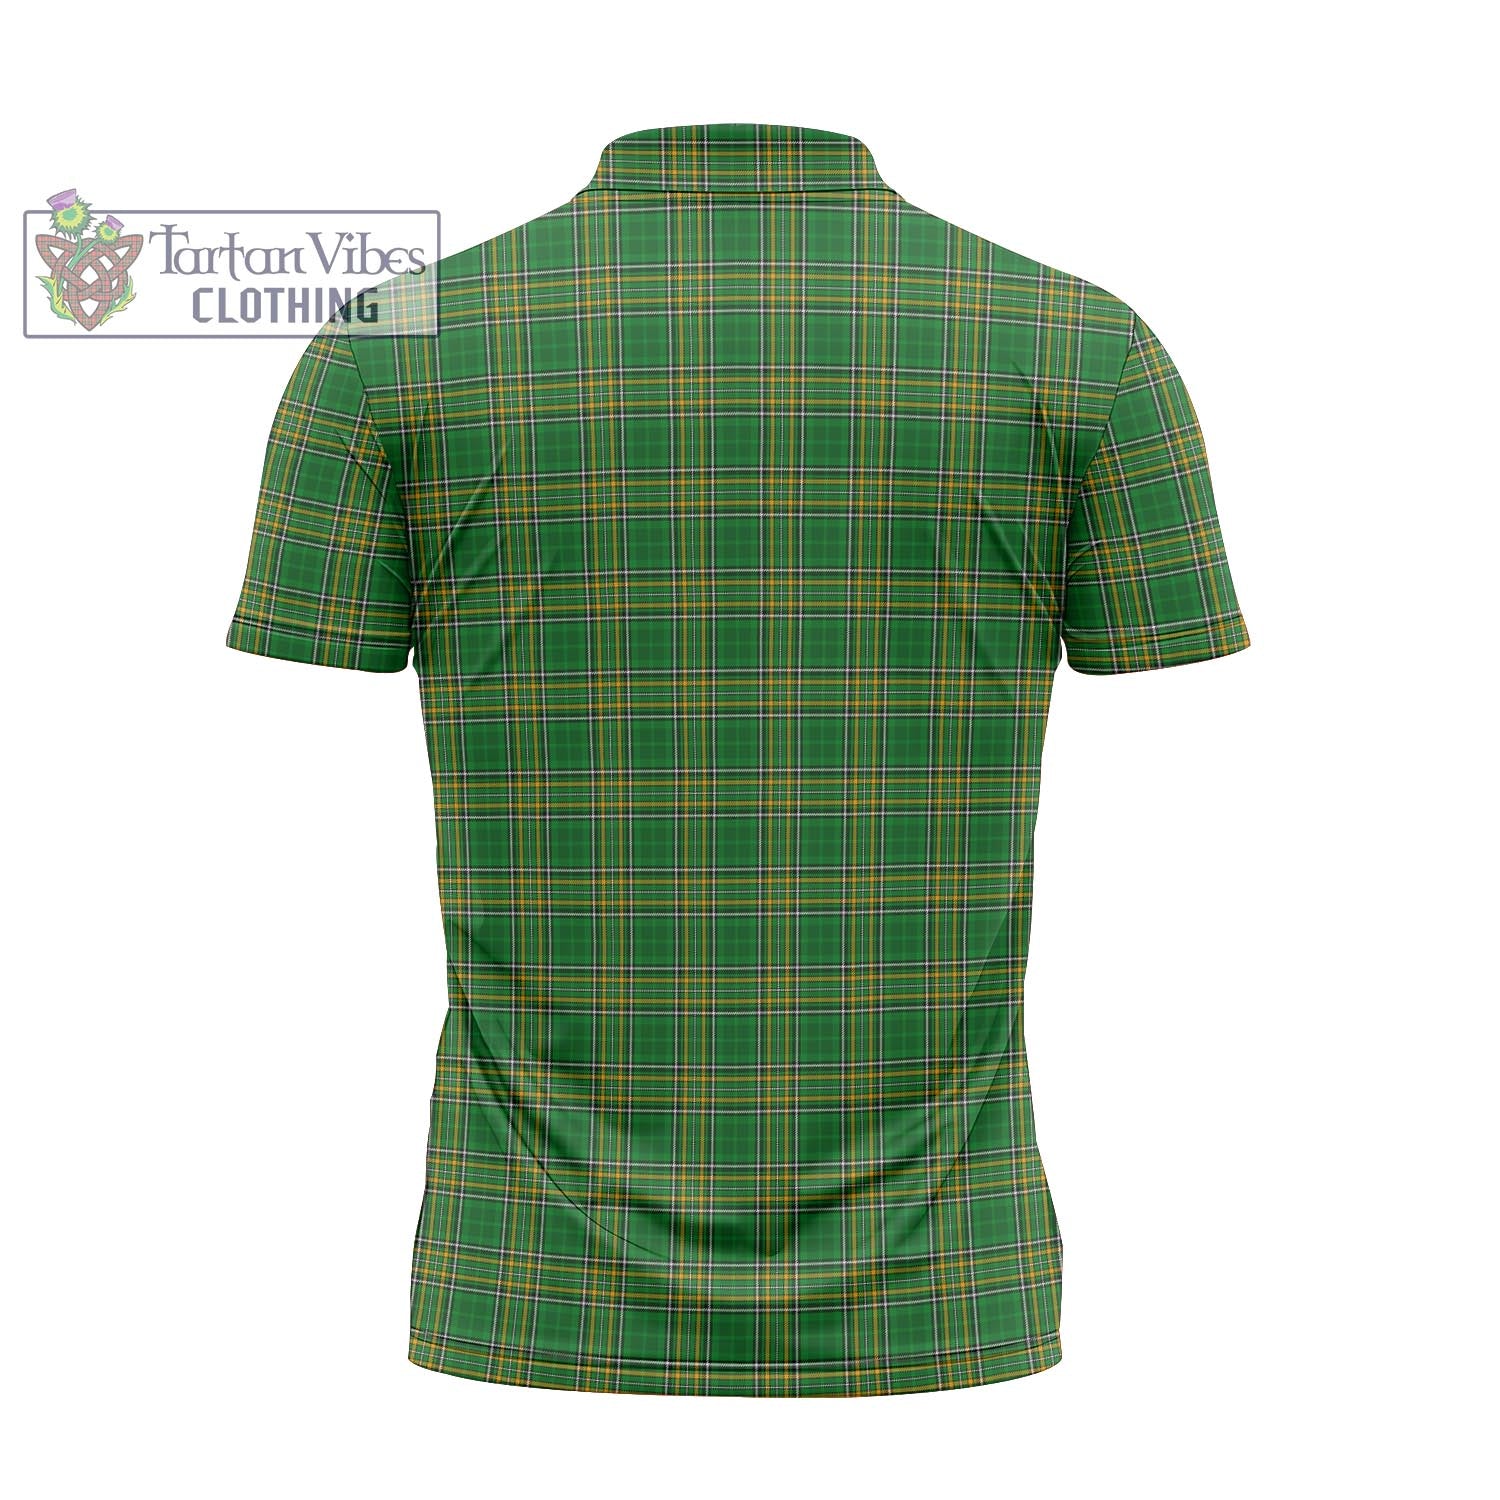 Tartan Vibes Clothing Logan Ireland Clan Tartan Zipper Polo Shirt with Coat of Arms